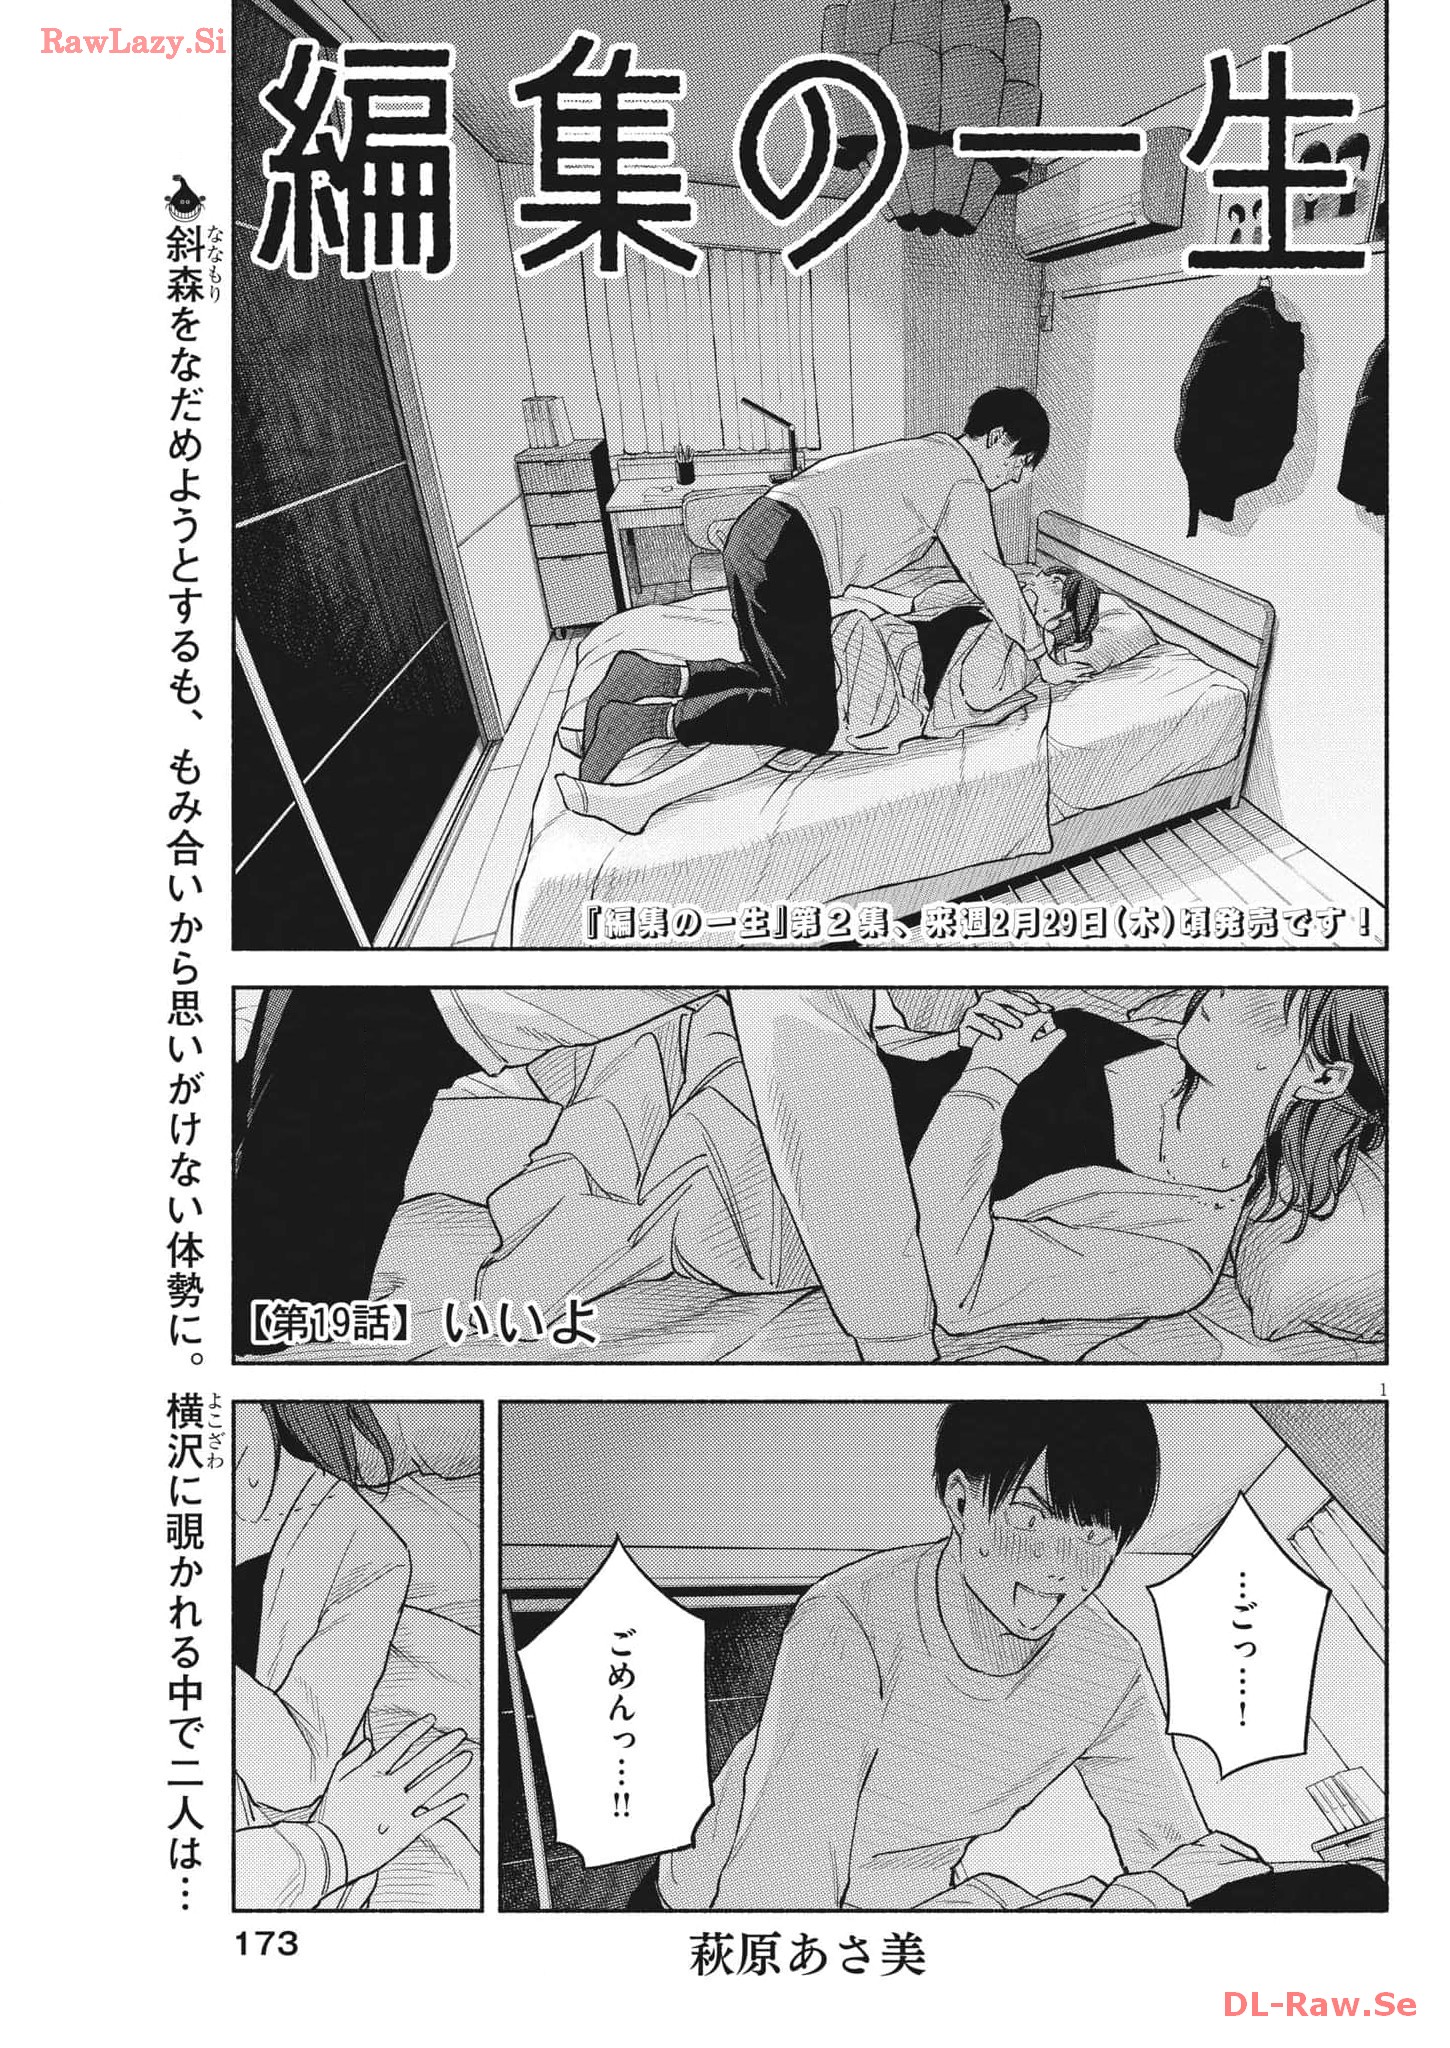 Henshuu no Isshou - Chapter 19 - Page 1